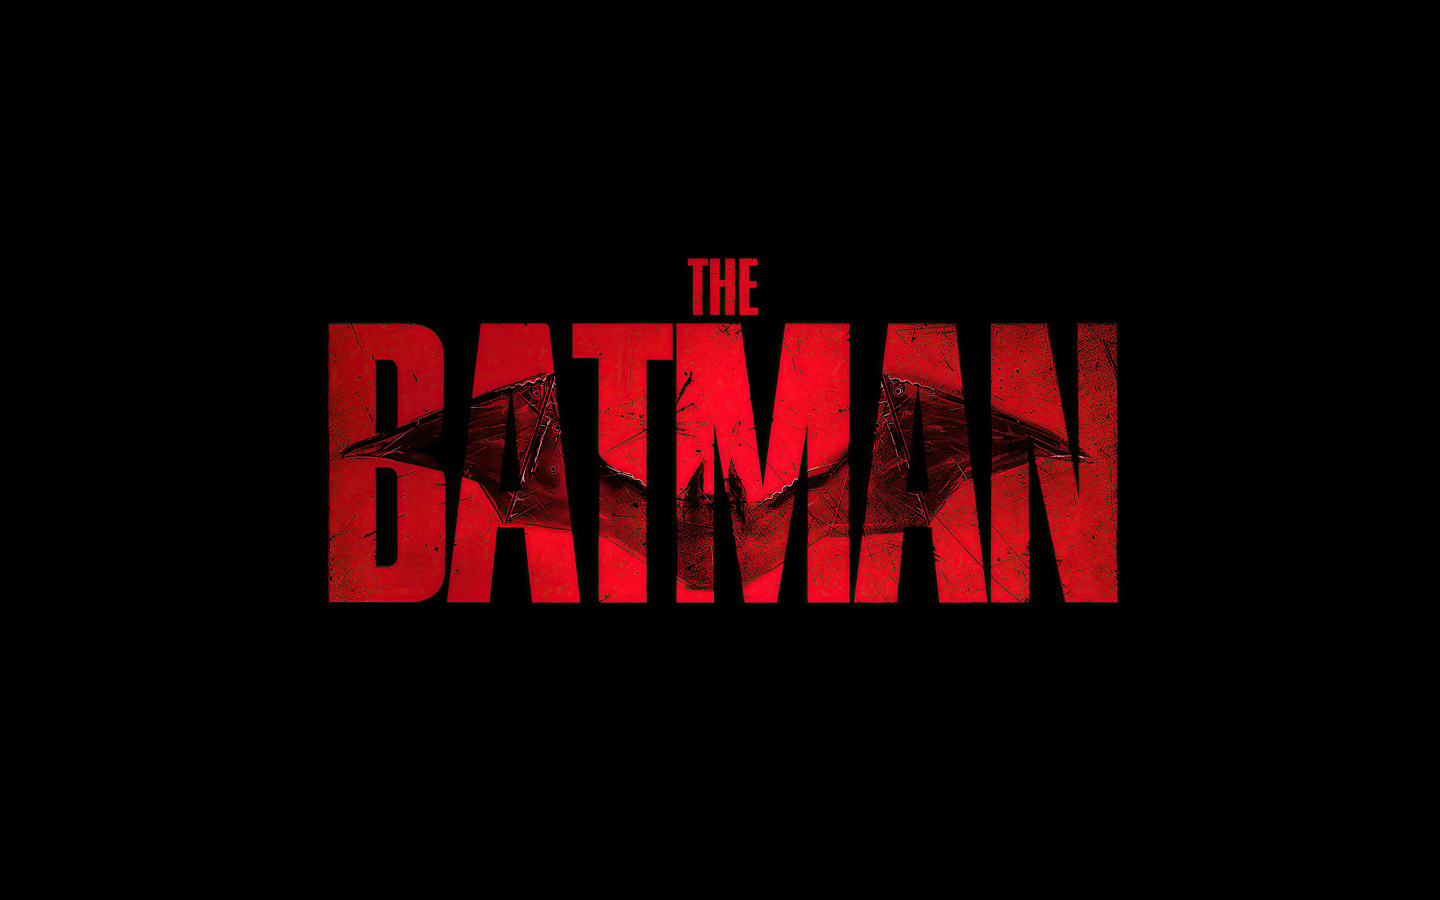 Логотип фильма Бэтмен на черном фоне